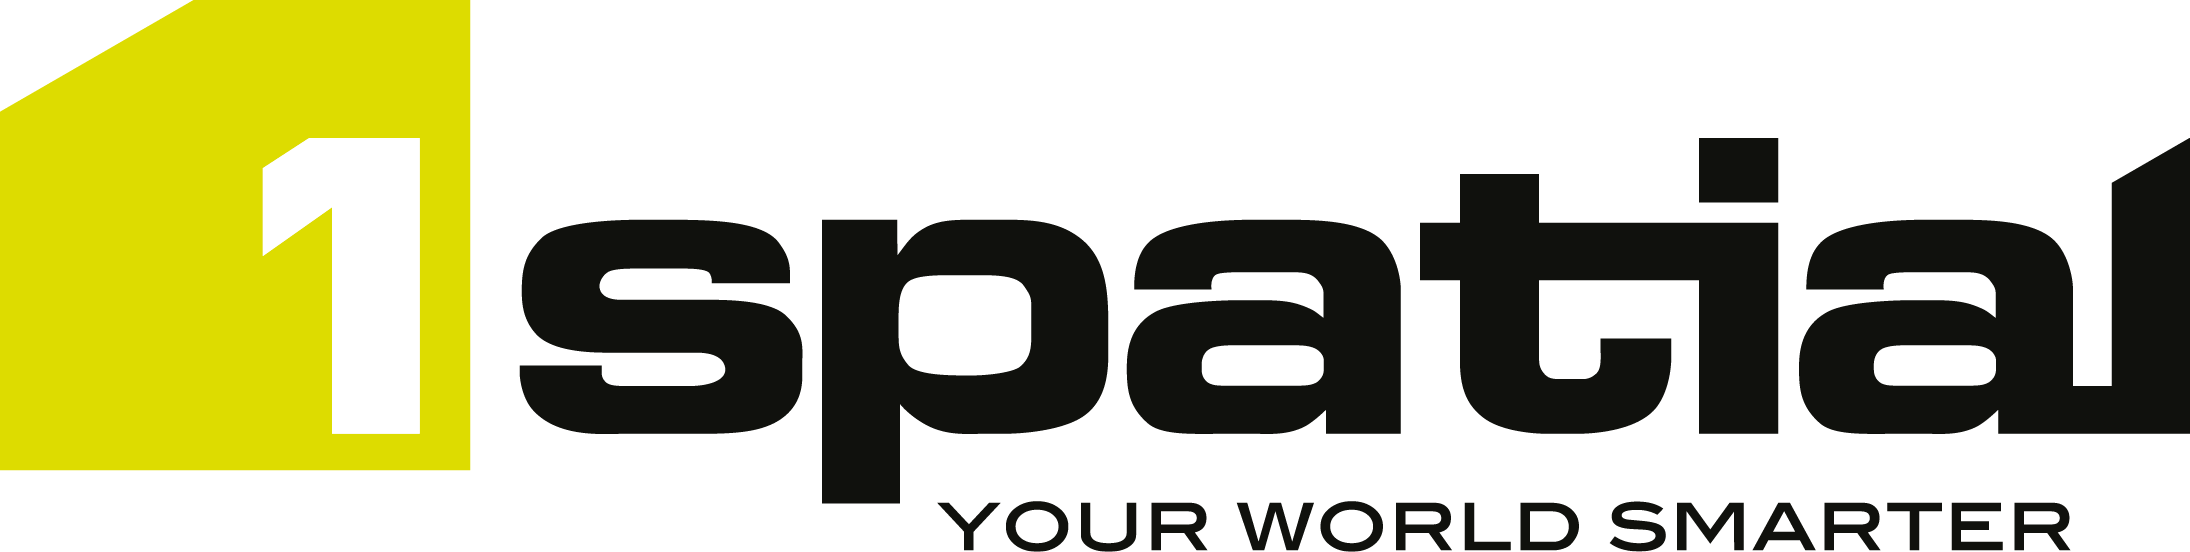 logo-1spatial-your-world-smarter